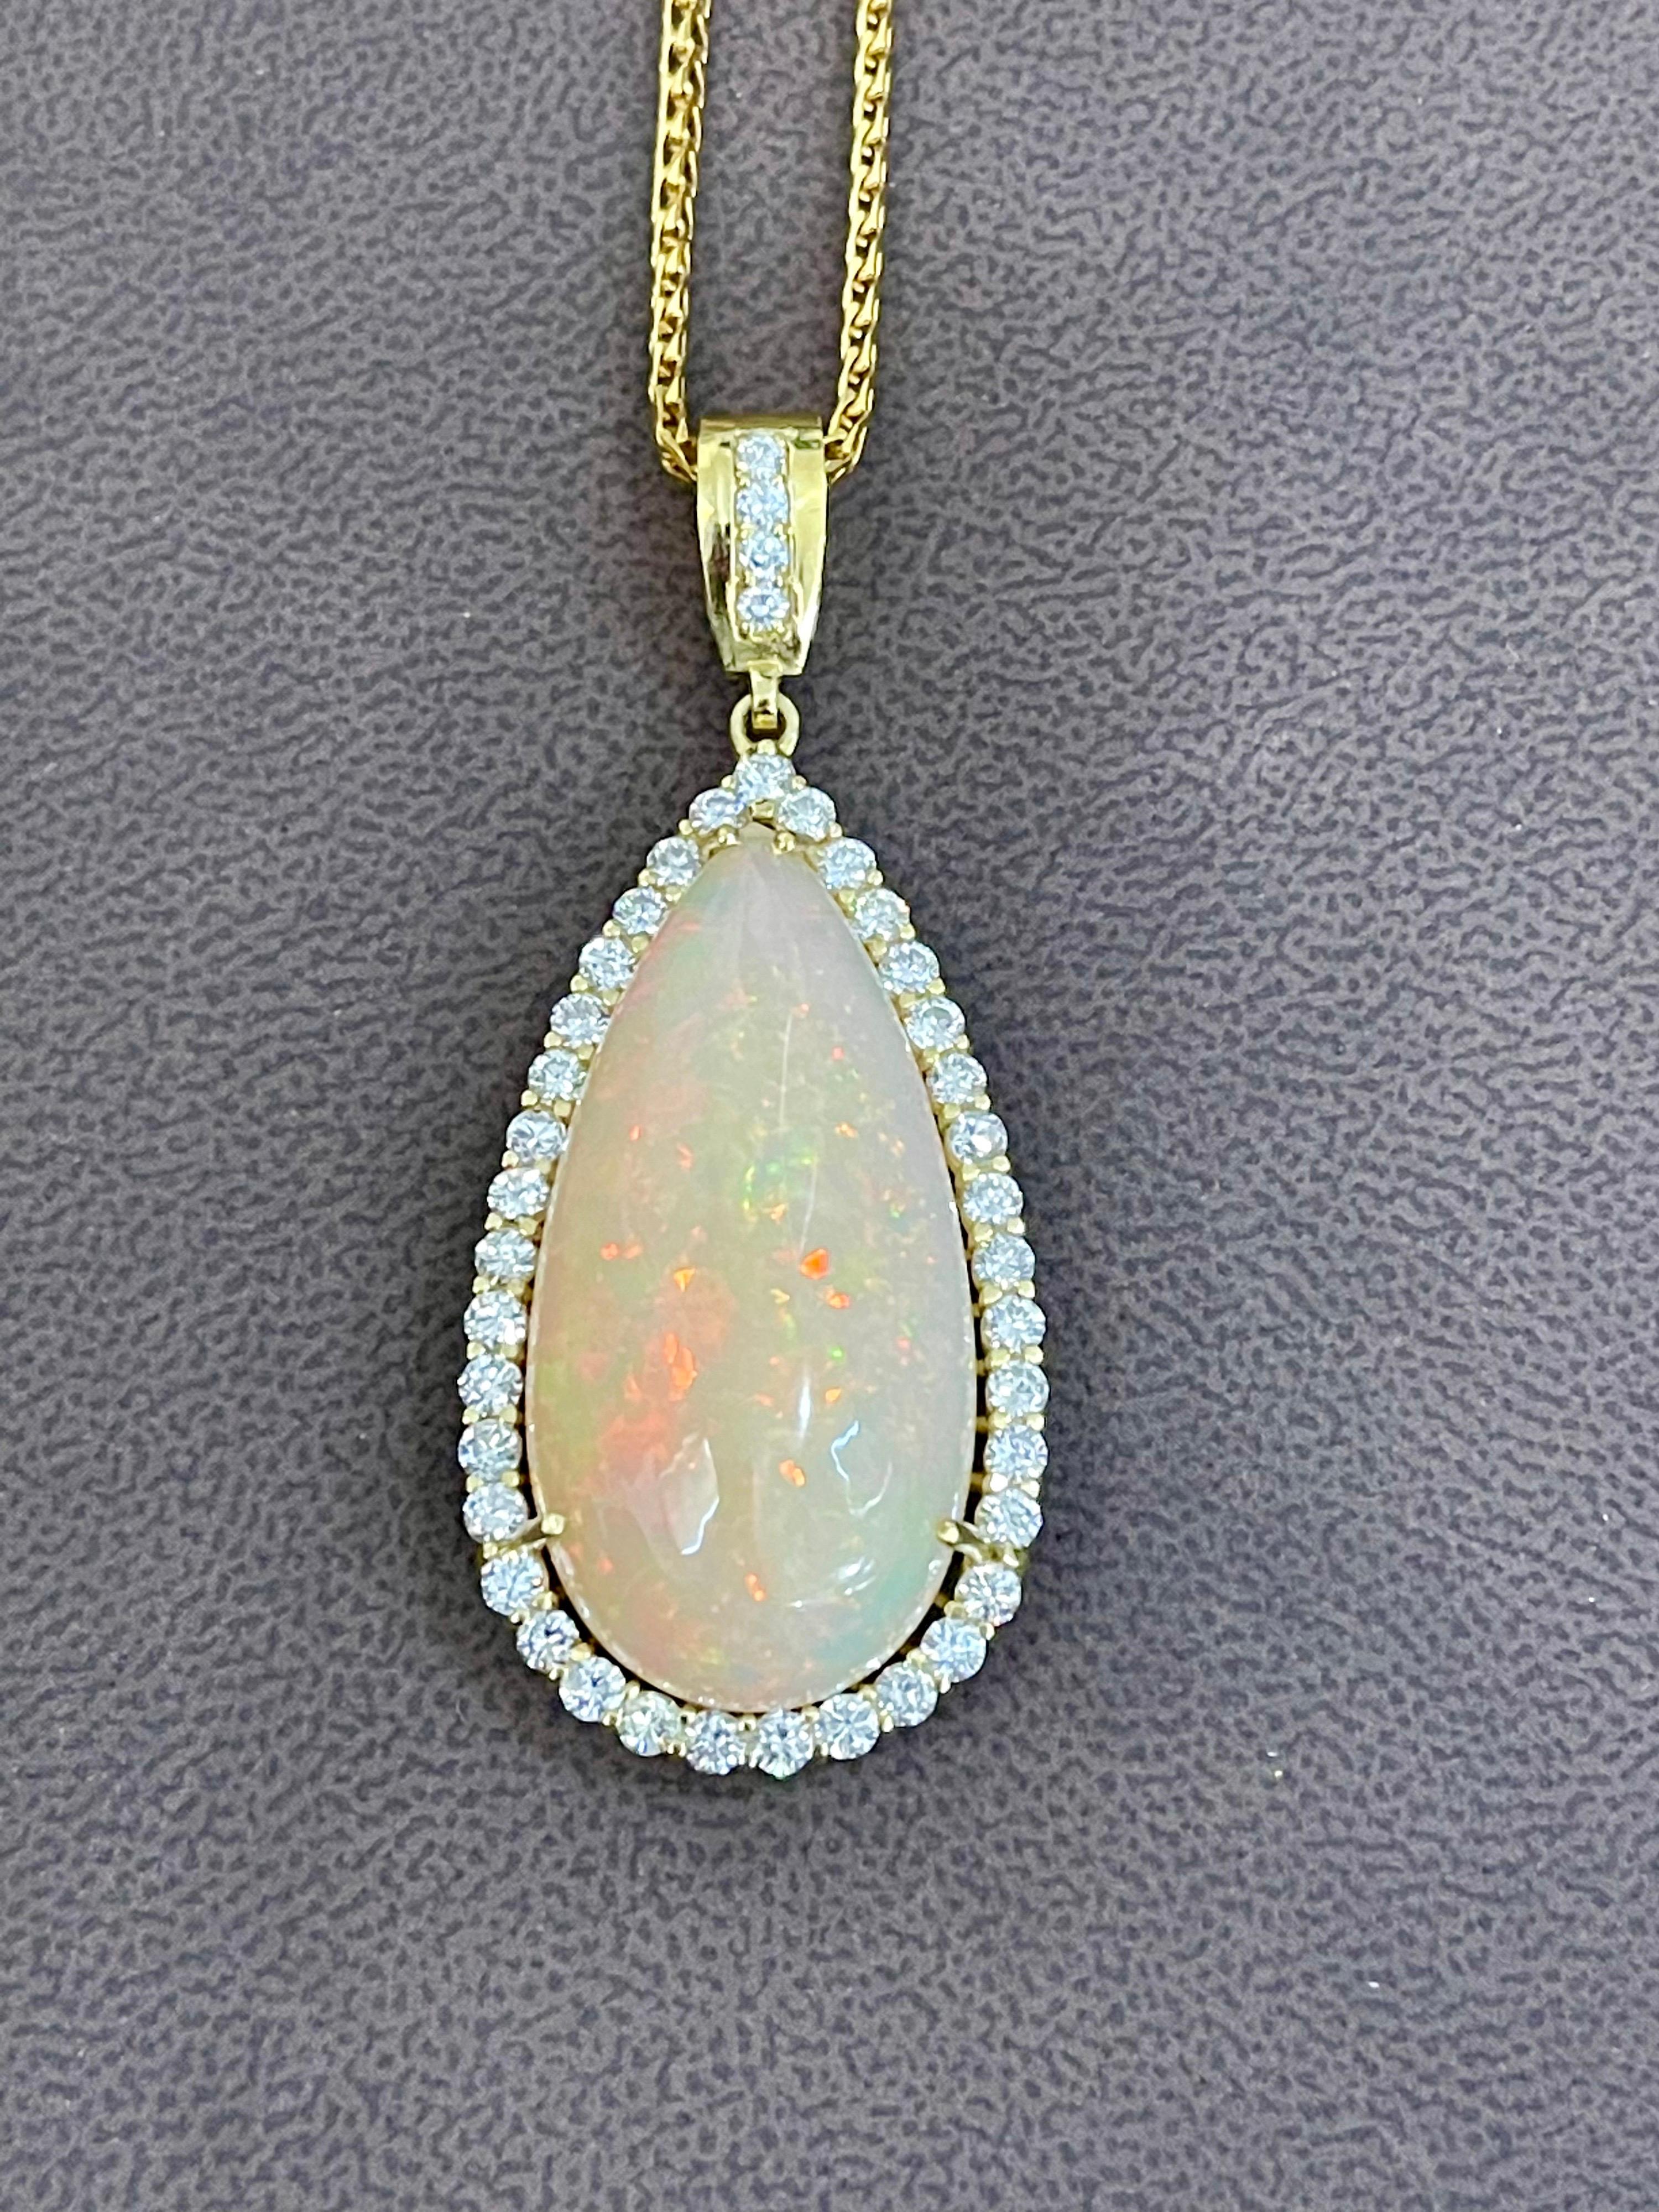 Women's 44 Carat Pear Ethiopian Opal and Diamond Pendant / Necklace 18 Karat Gold Estate